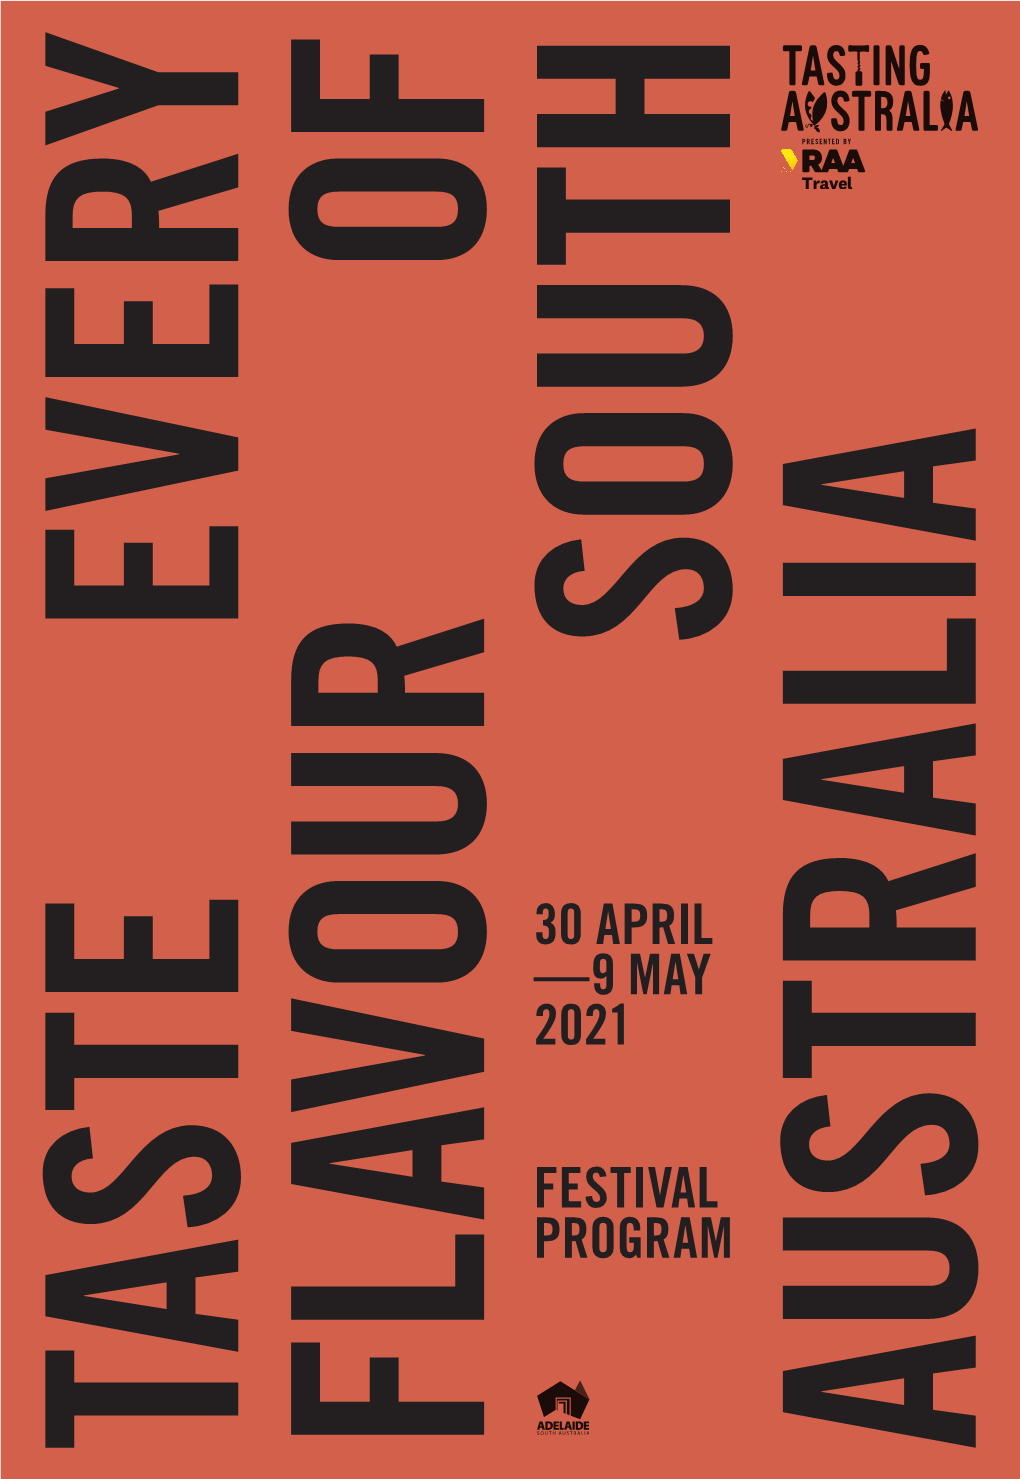 30 April —9 May 2021 Festival Program